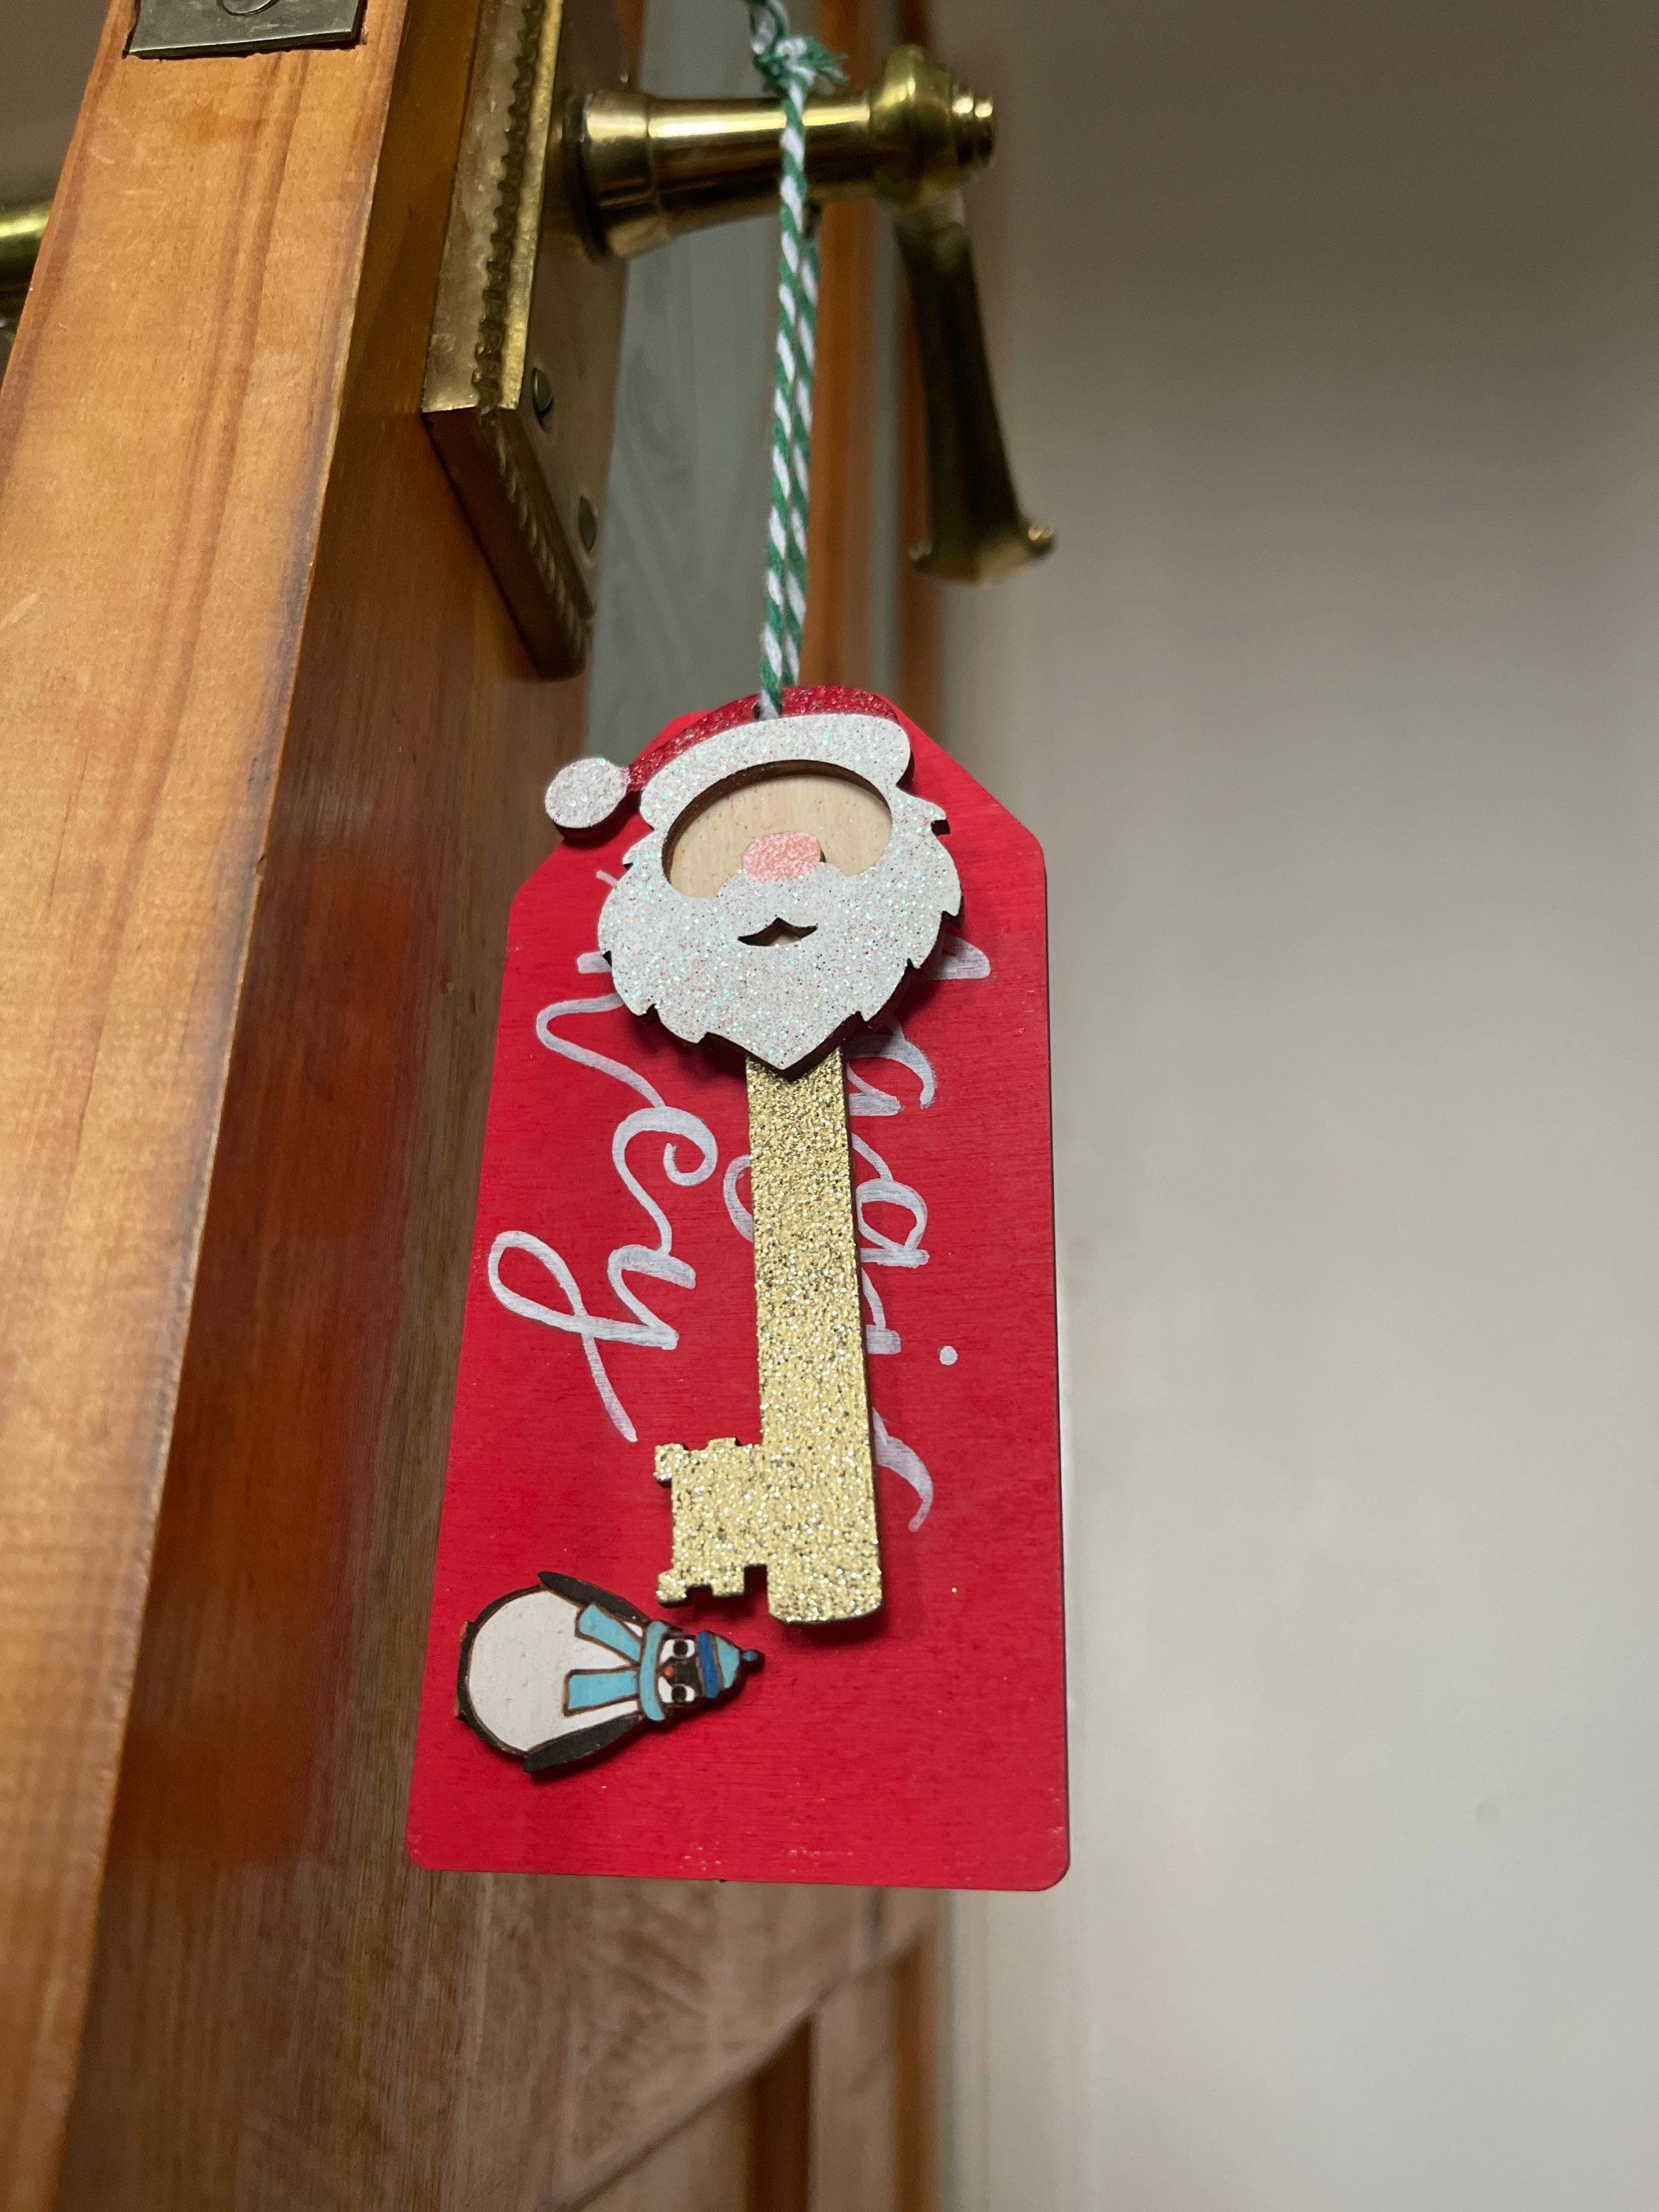 Santa's Magic Key, Magic Santa Key, Engraved Christmas Ornaments